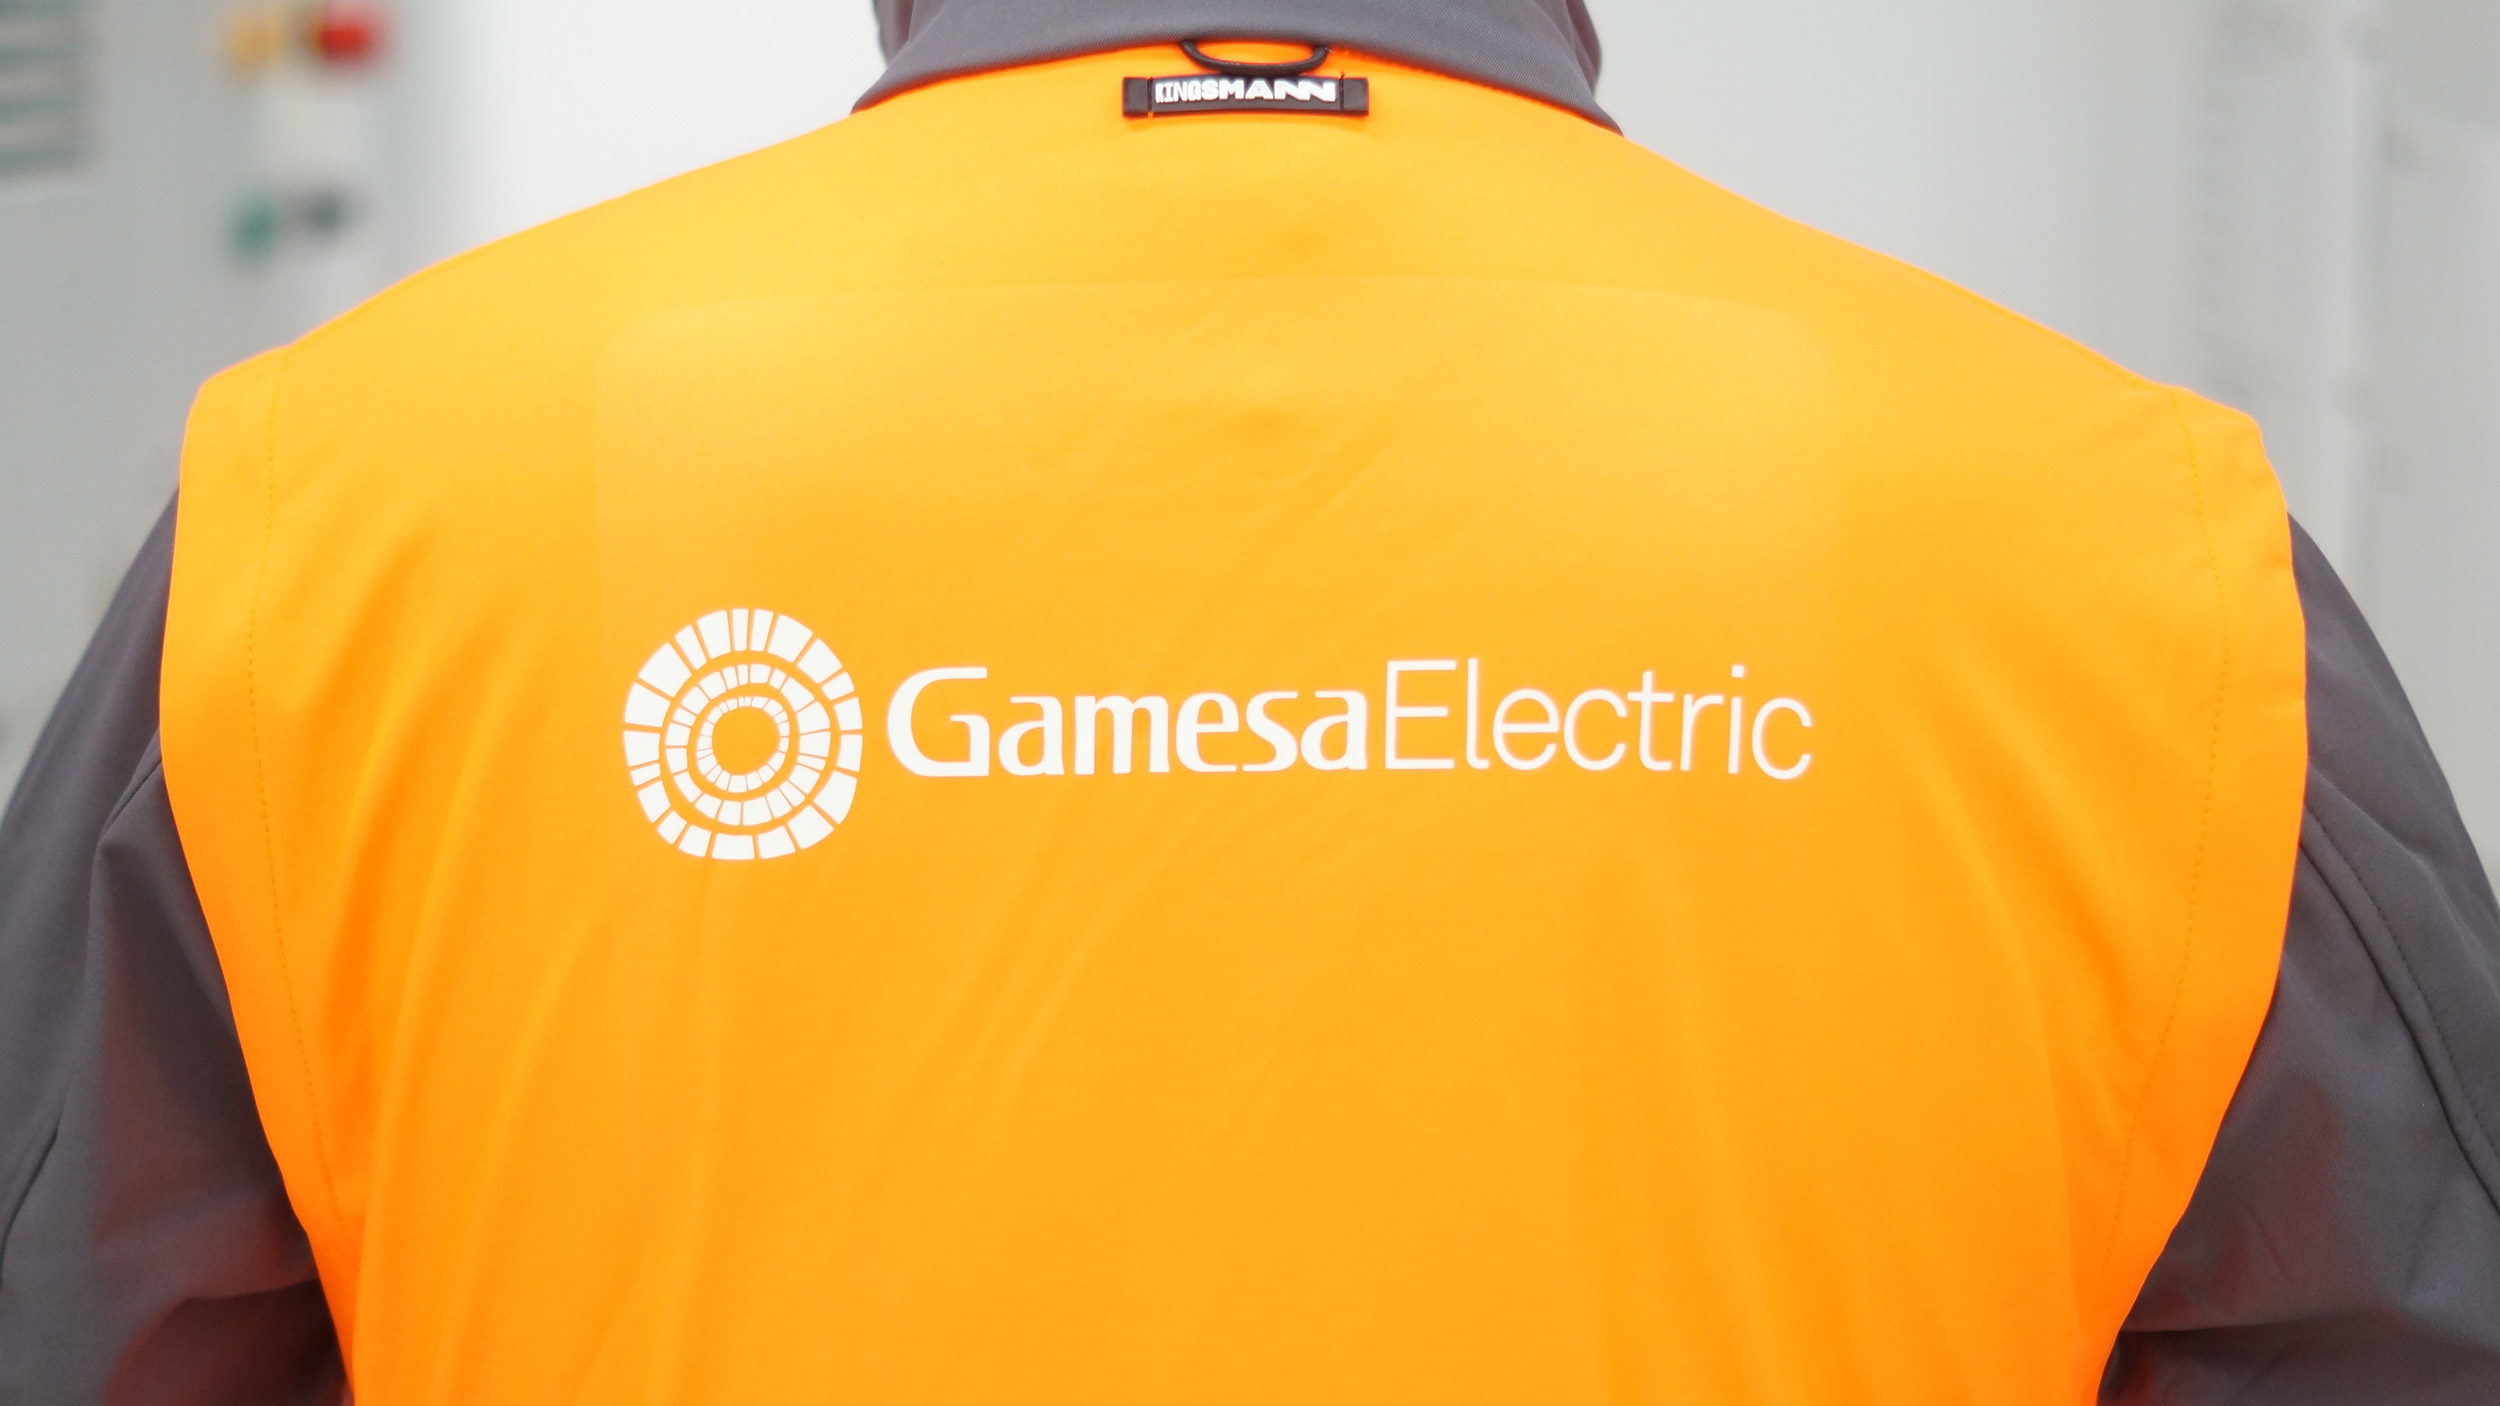 Gamesa Electric